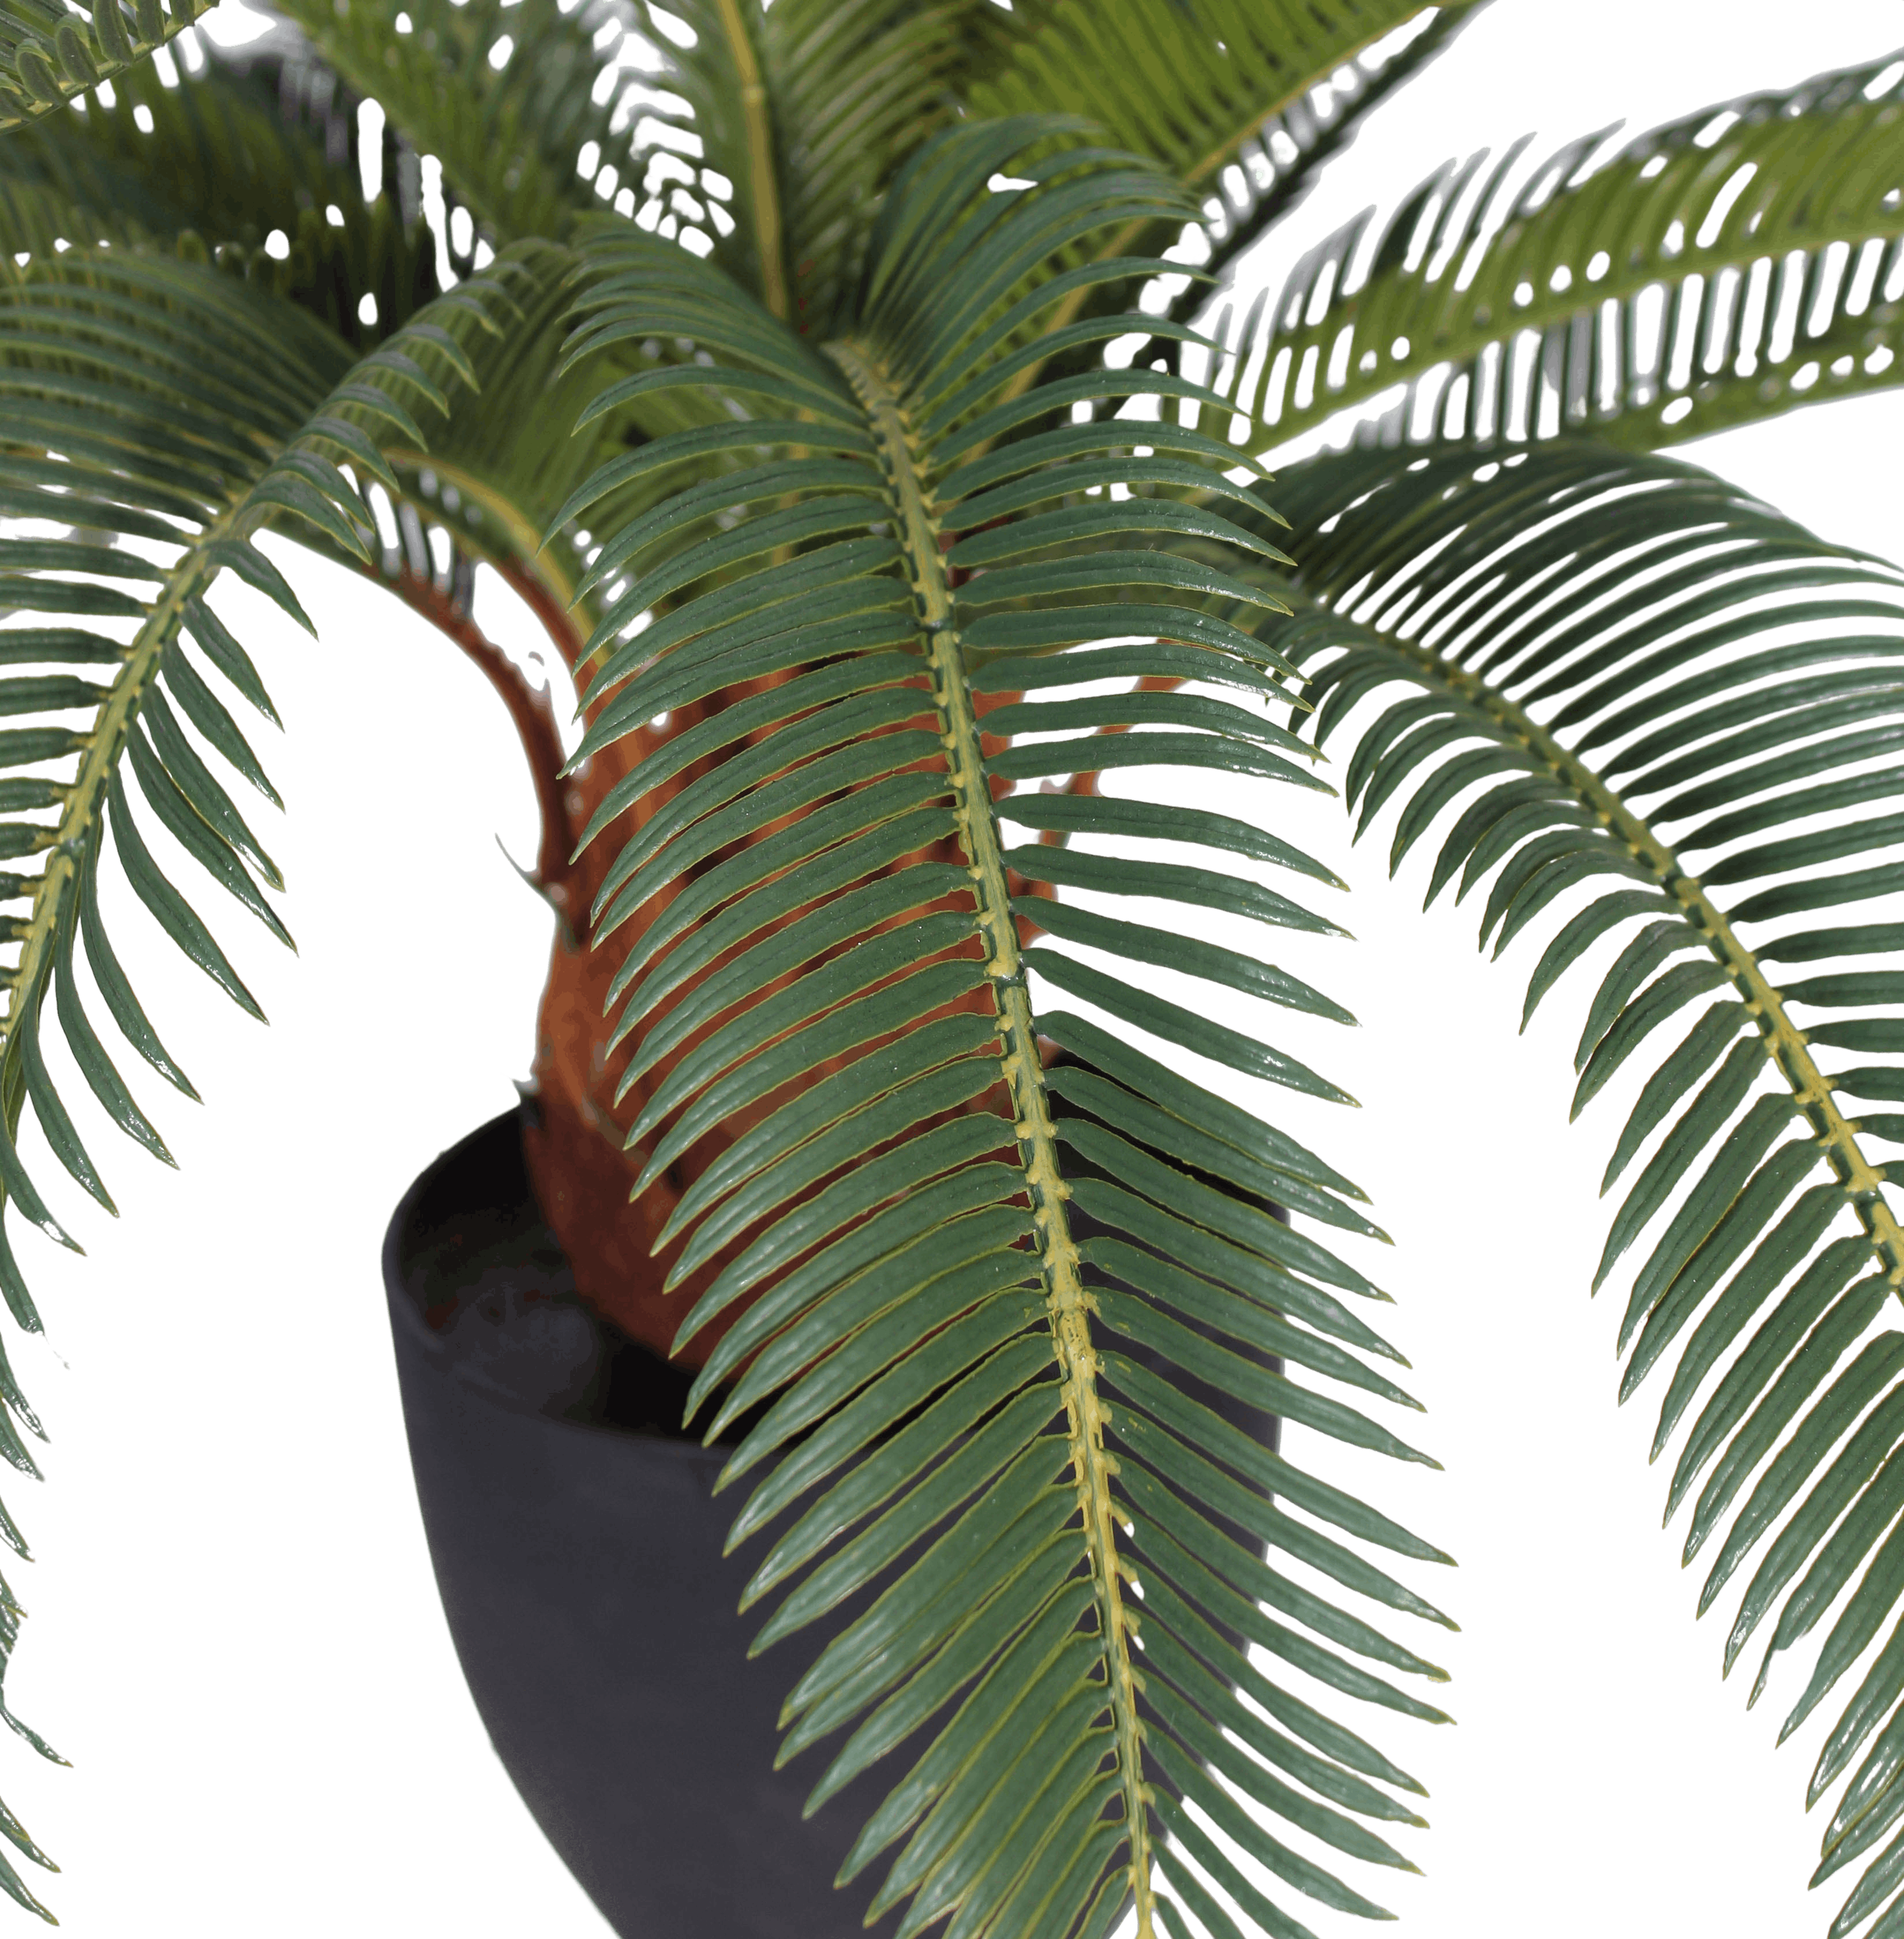 Cycas Tropicale 70 cm Leaf Design UK-Palma Artificiale Grande